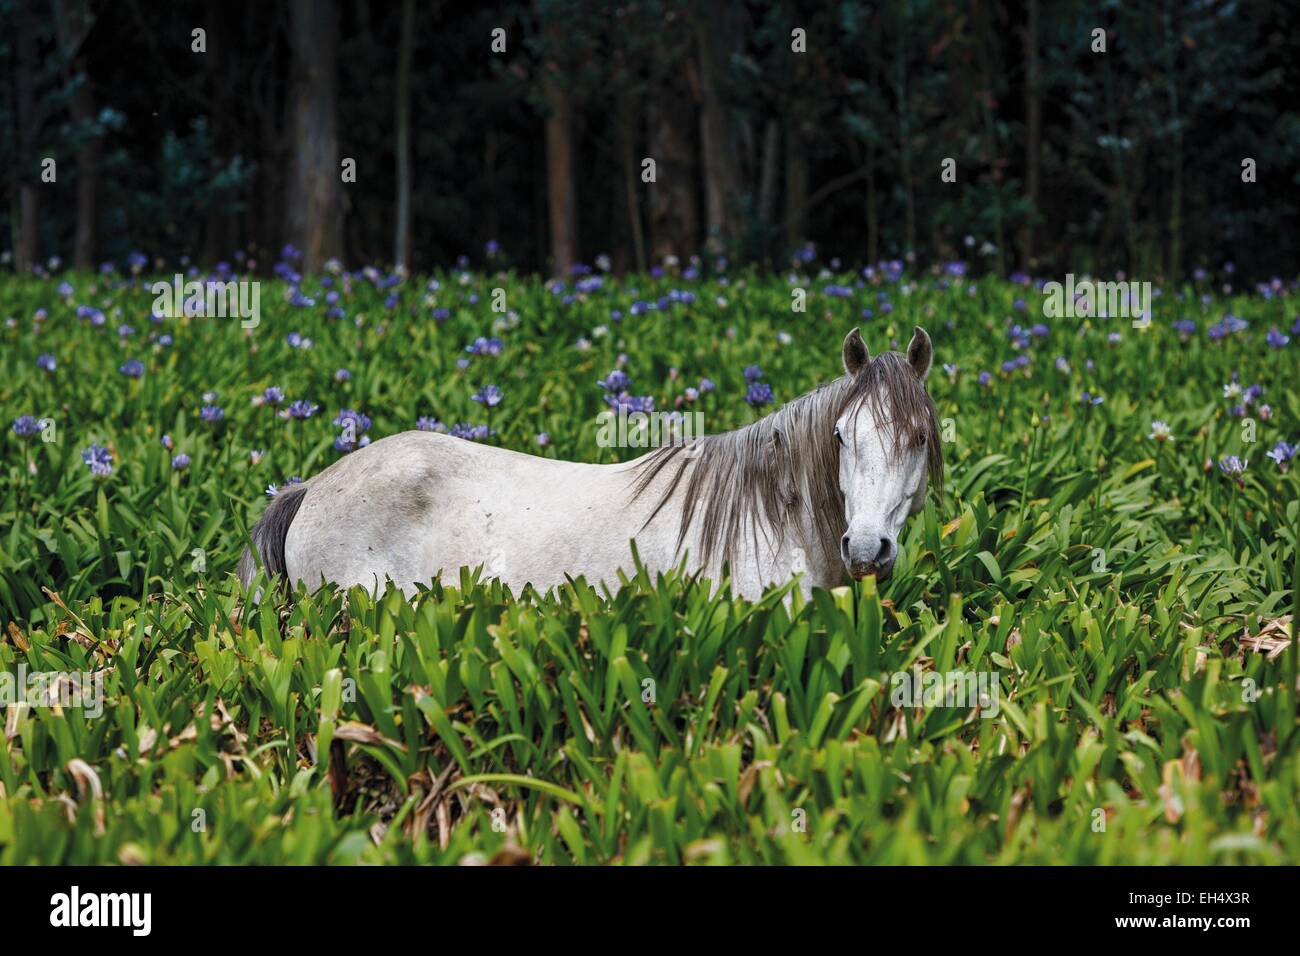 Ecuador, Pichincha, Cayambe, wild horse in a field of agapanthus Stock Photo